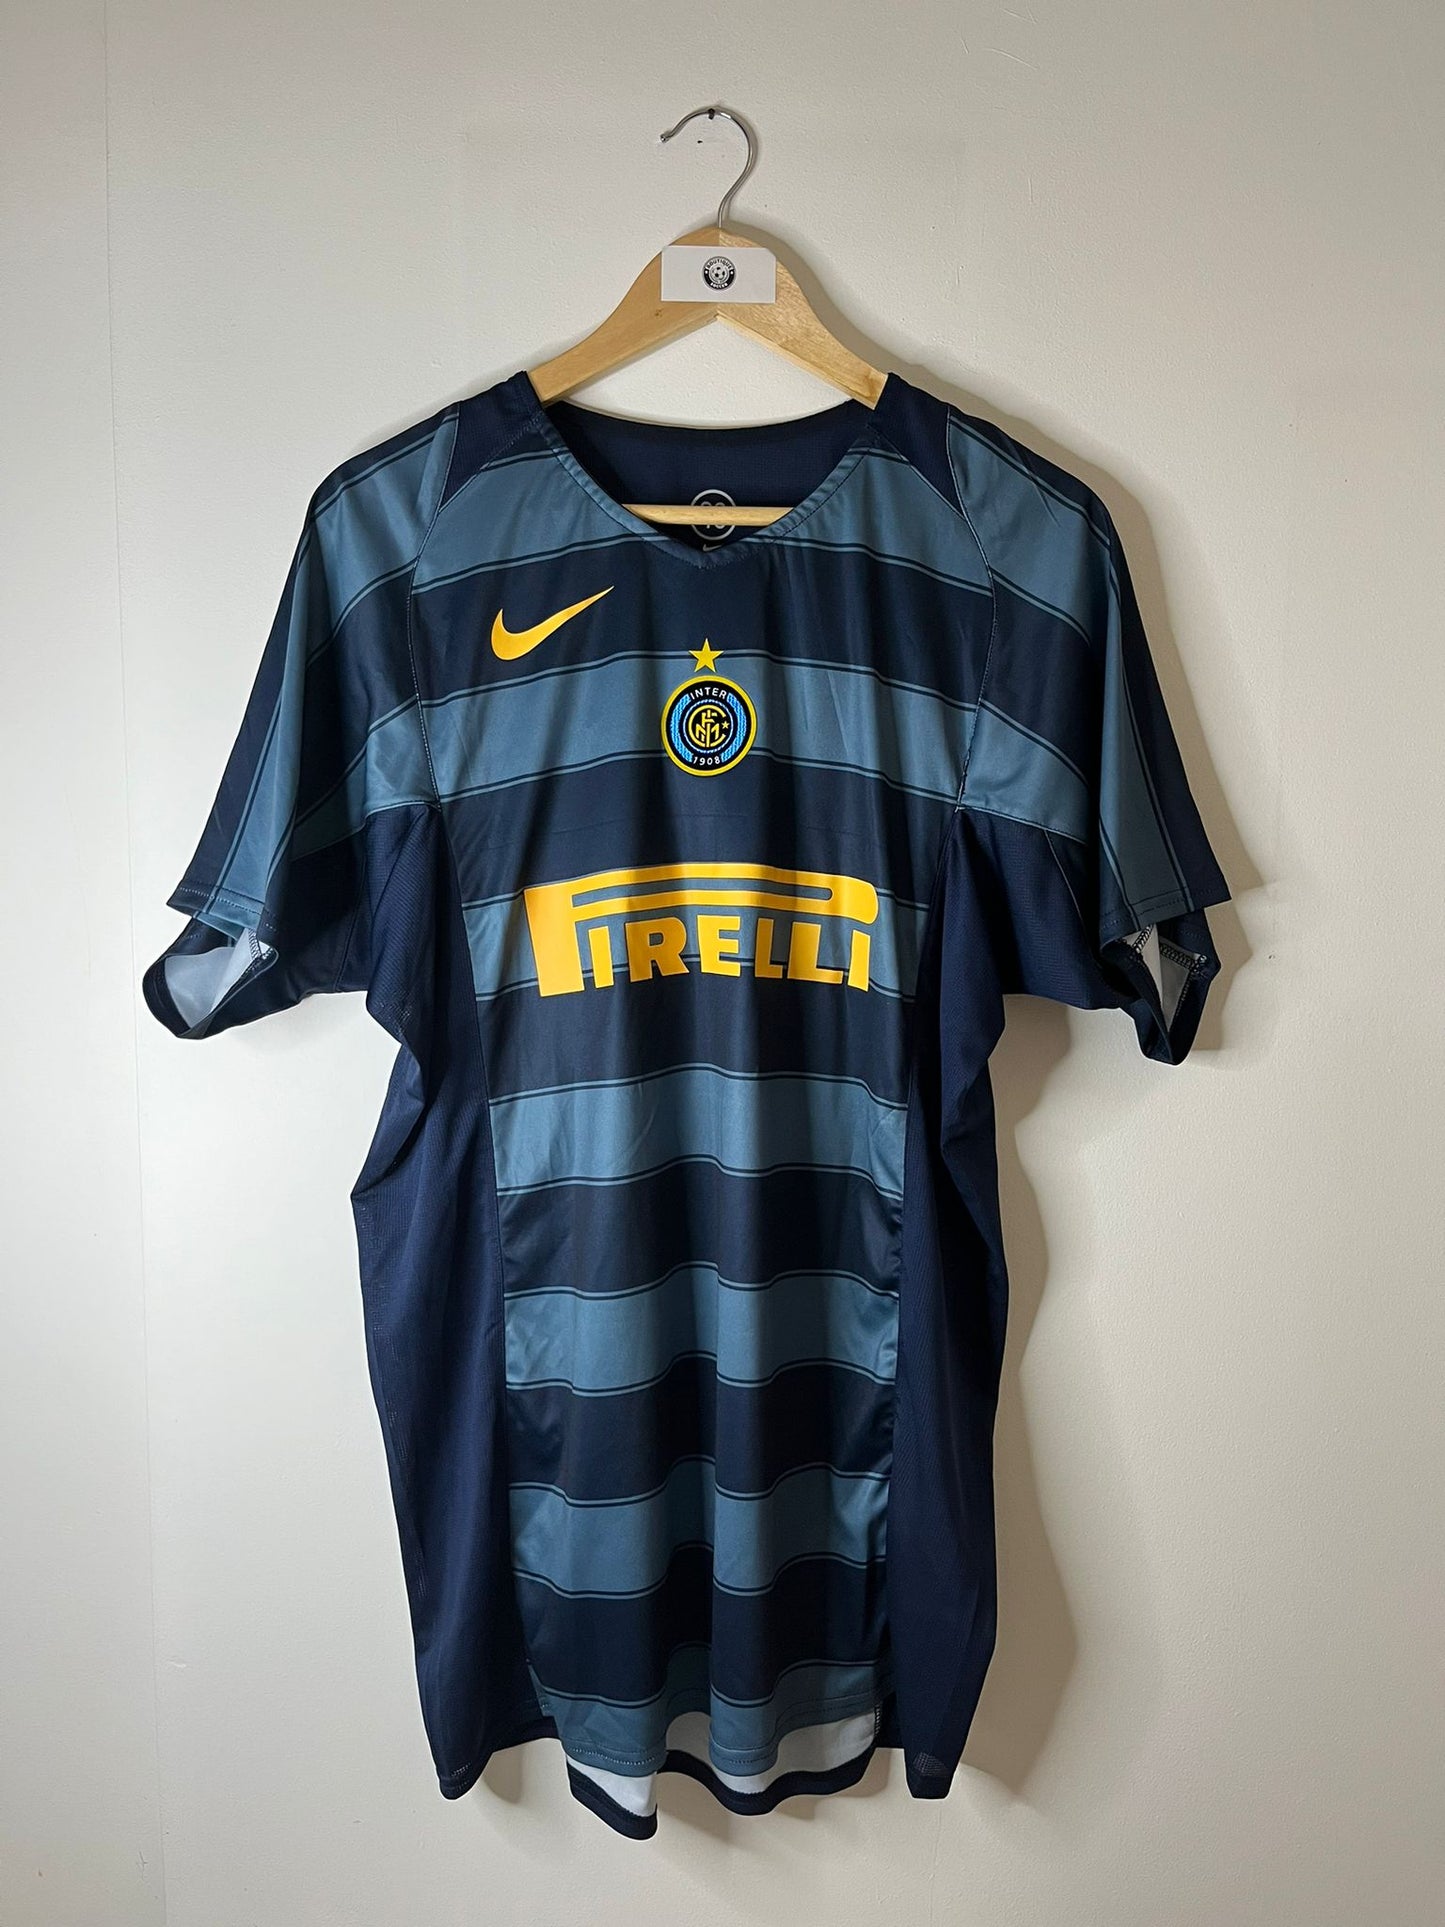 Inter jersey